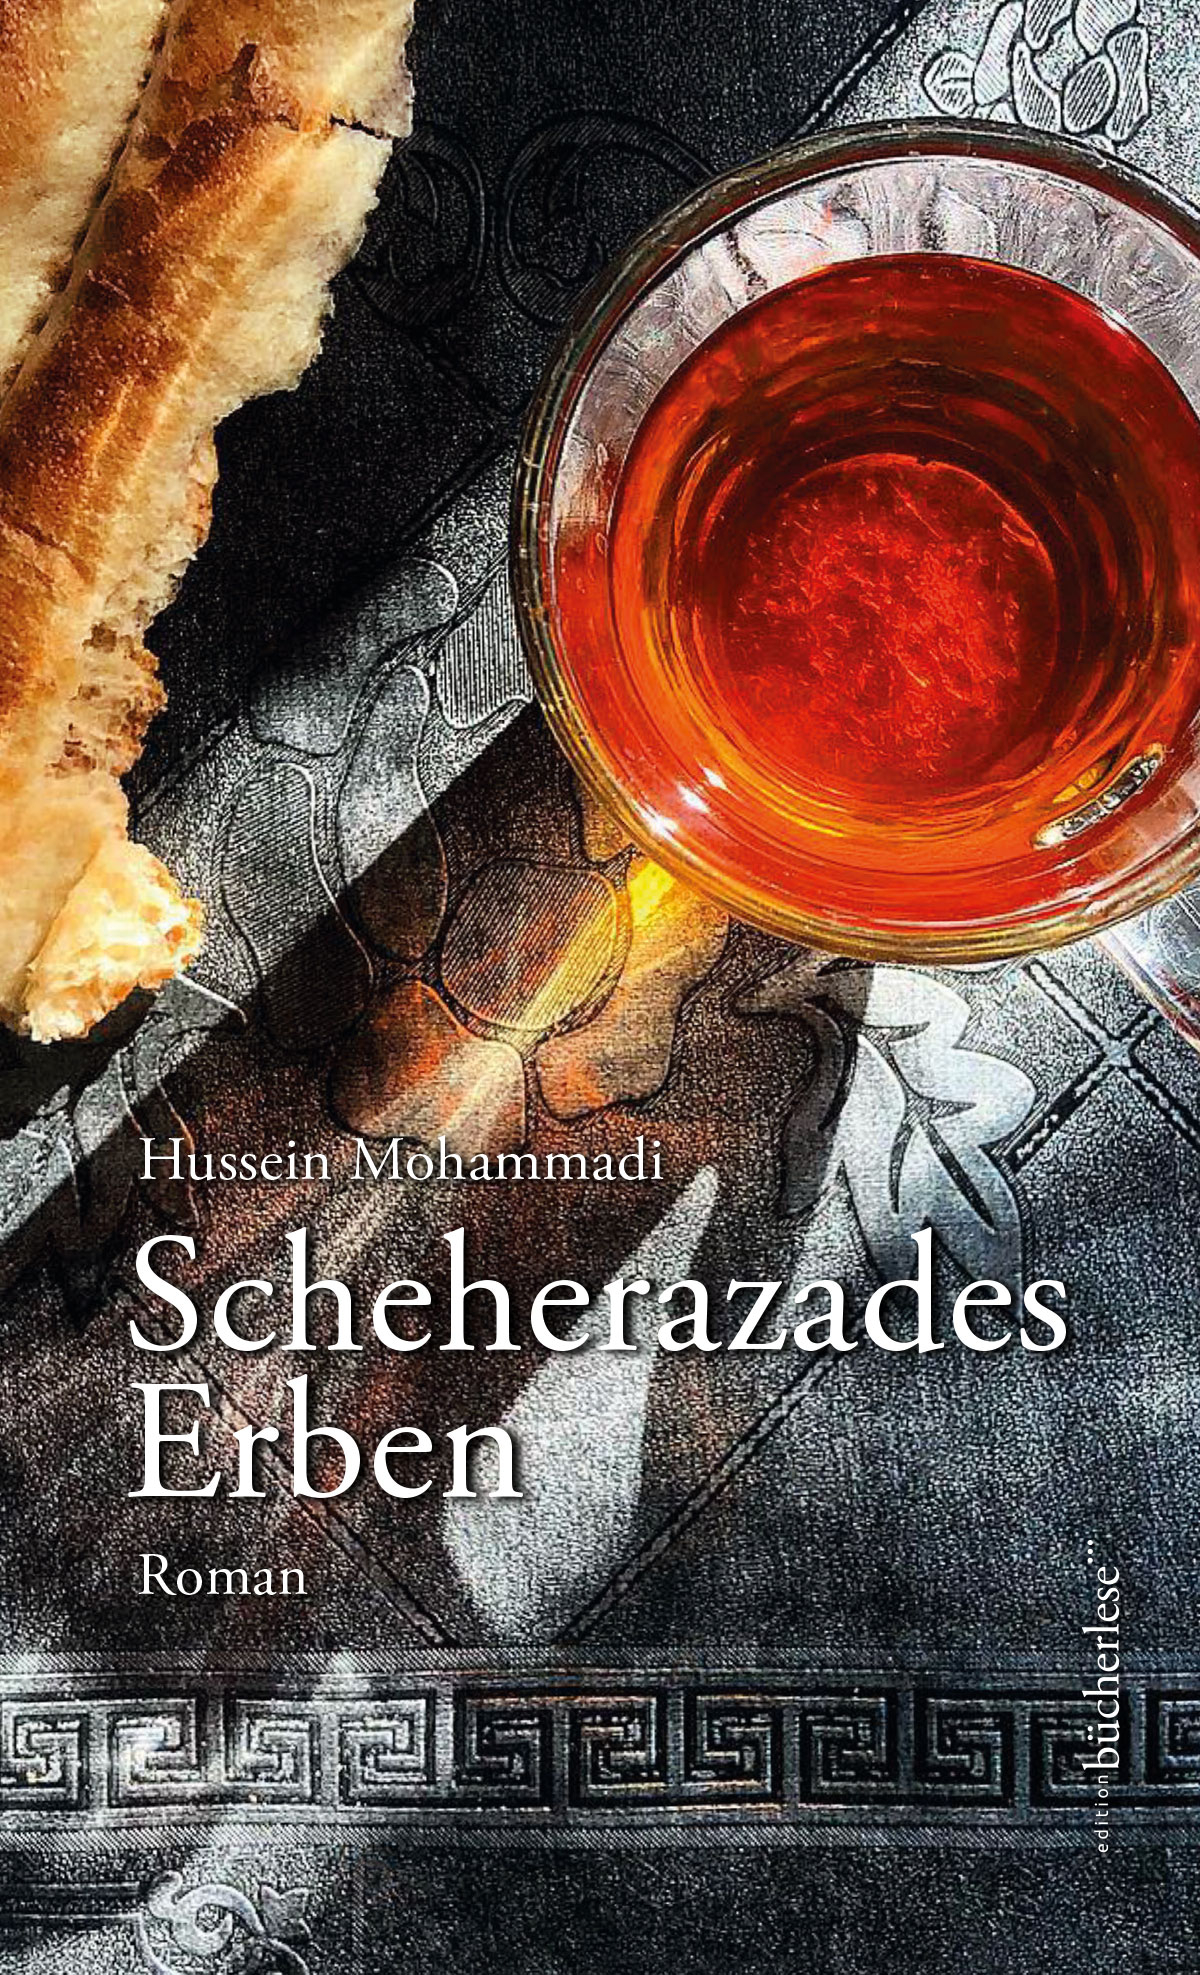 Cover of Scheherazade's Erben (source: bücherlese)